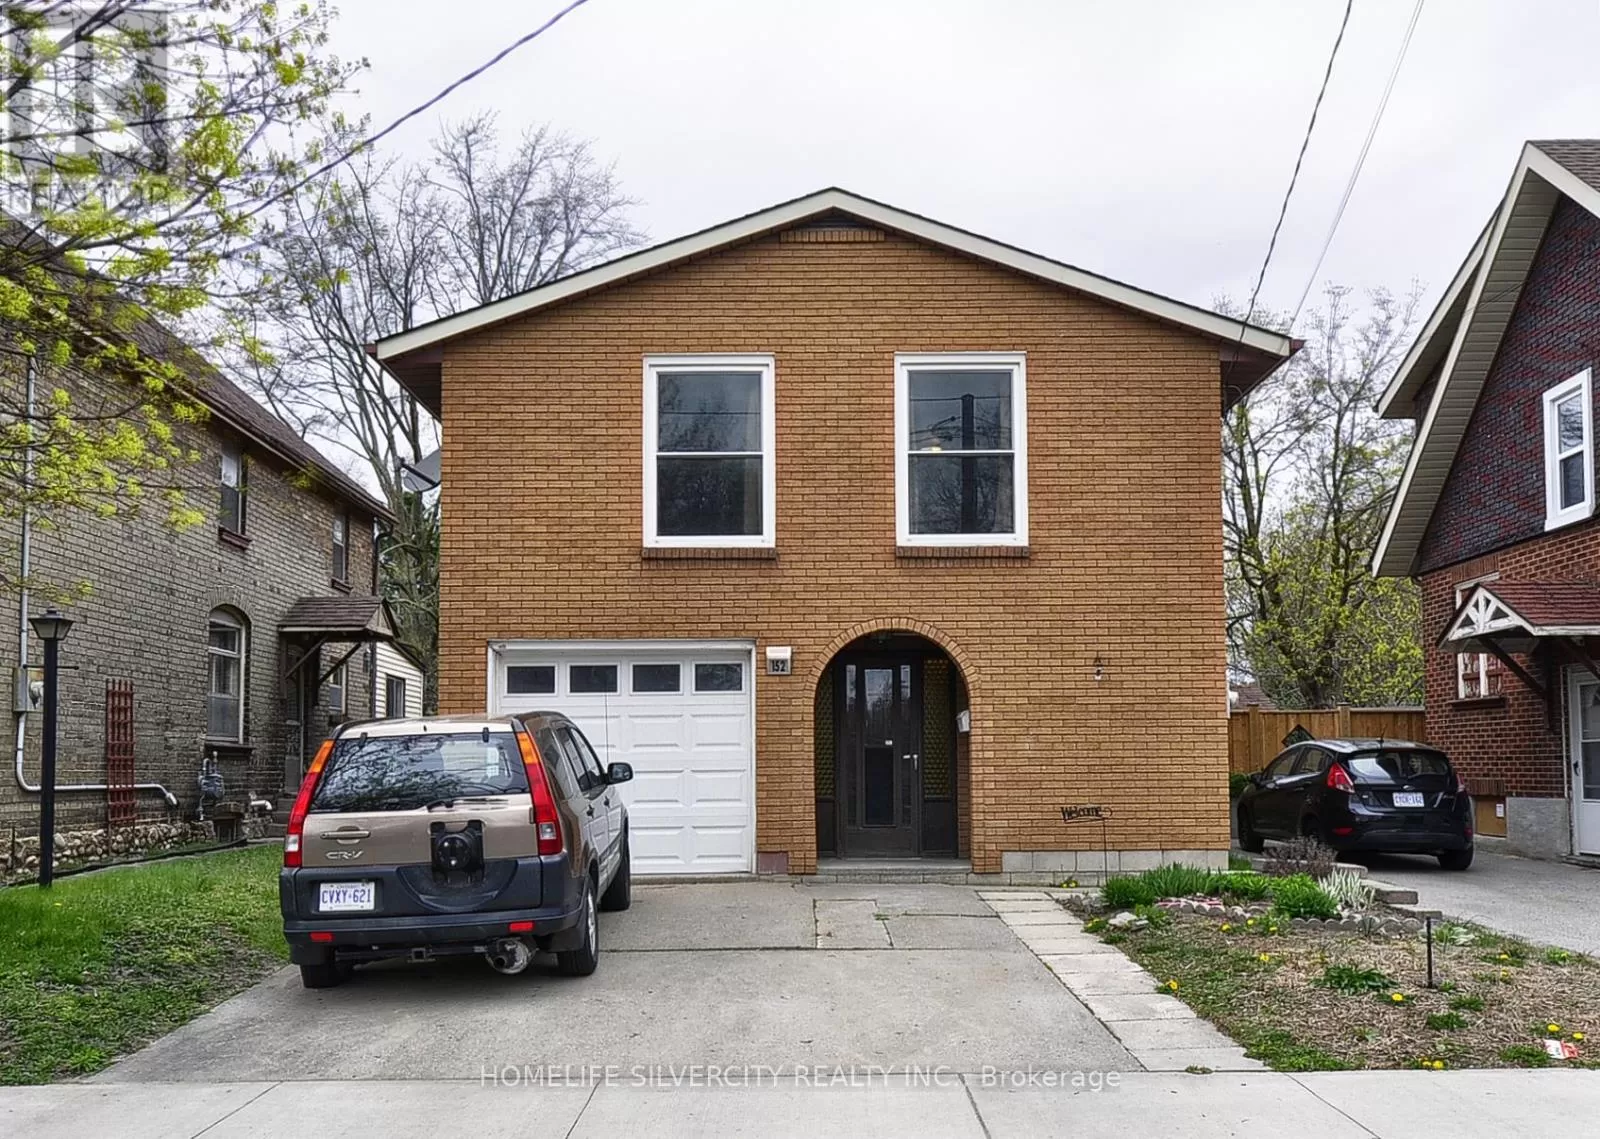 Duplex for rent: 152 Elgin St, Brantford, Ontario N3S 5A5